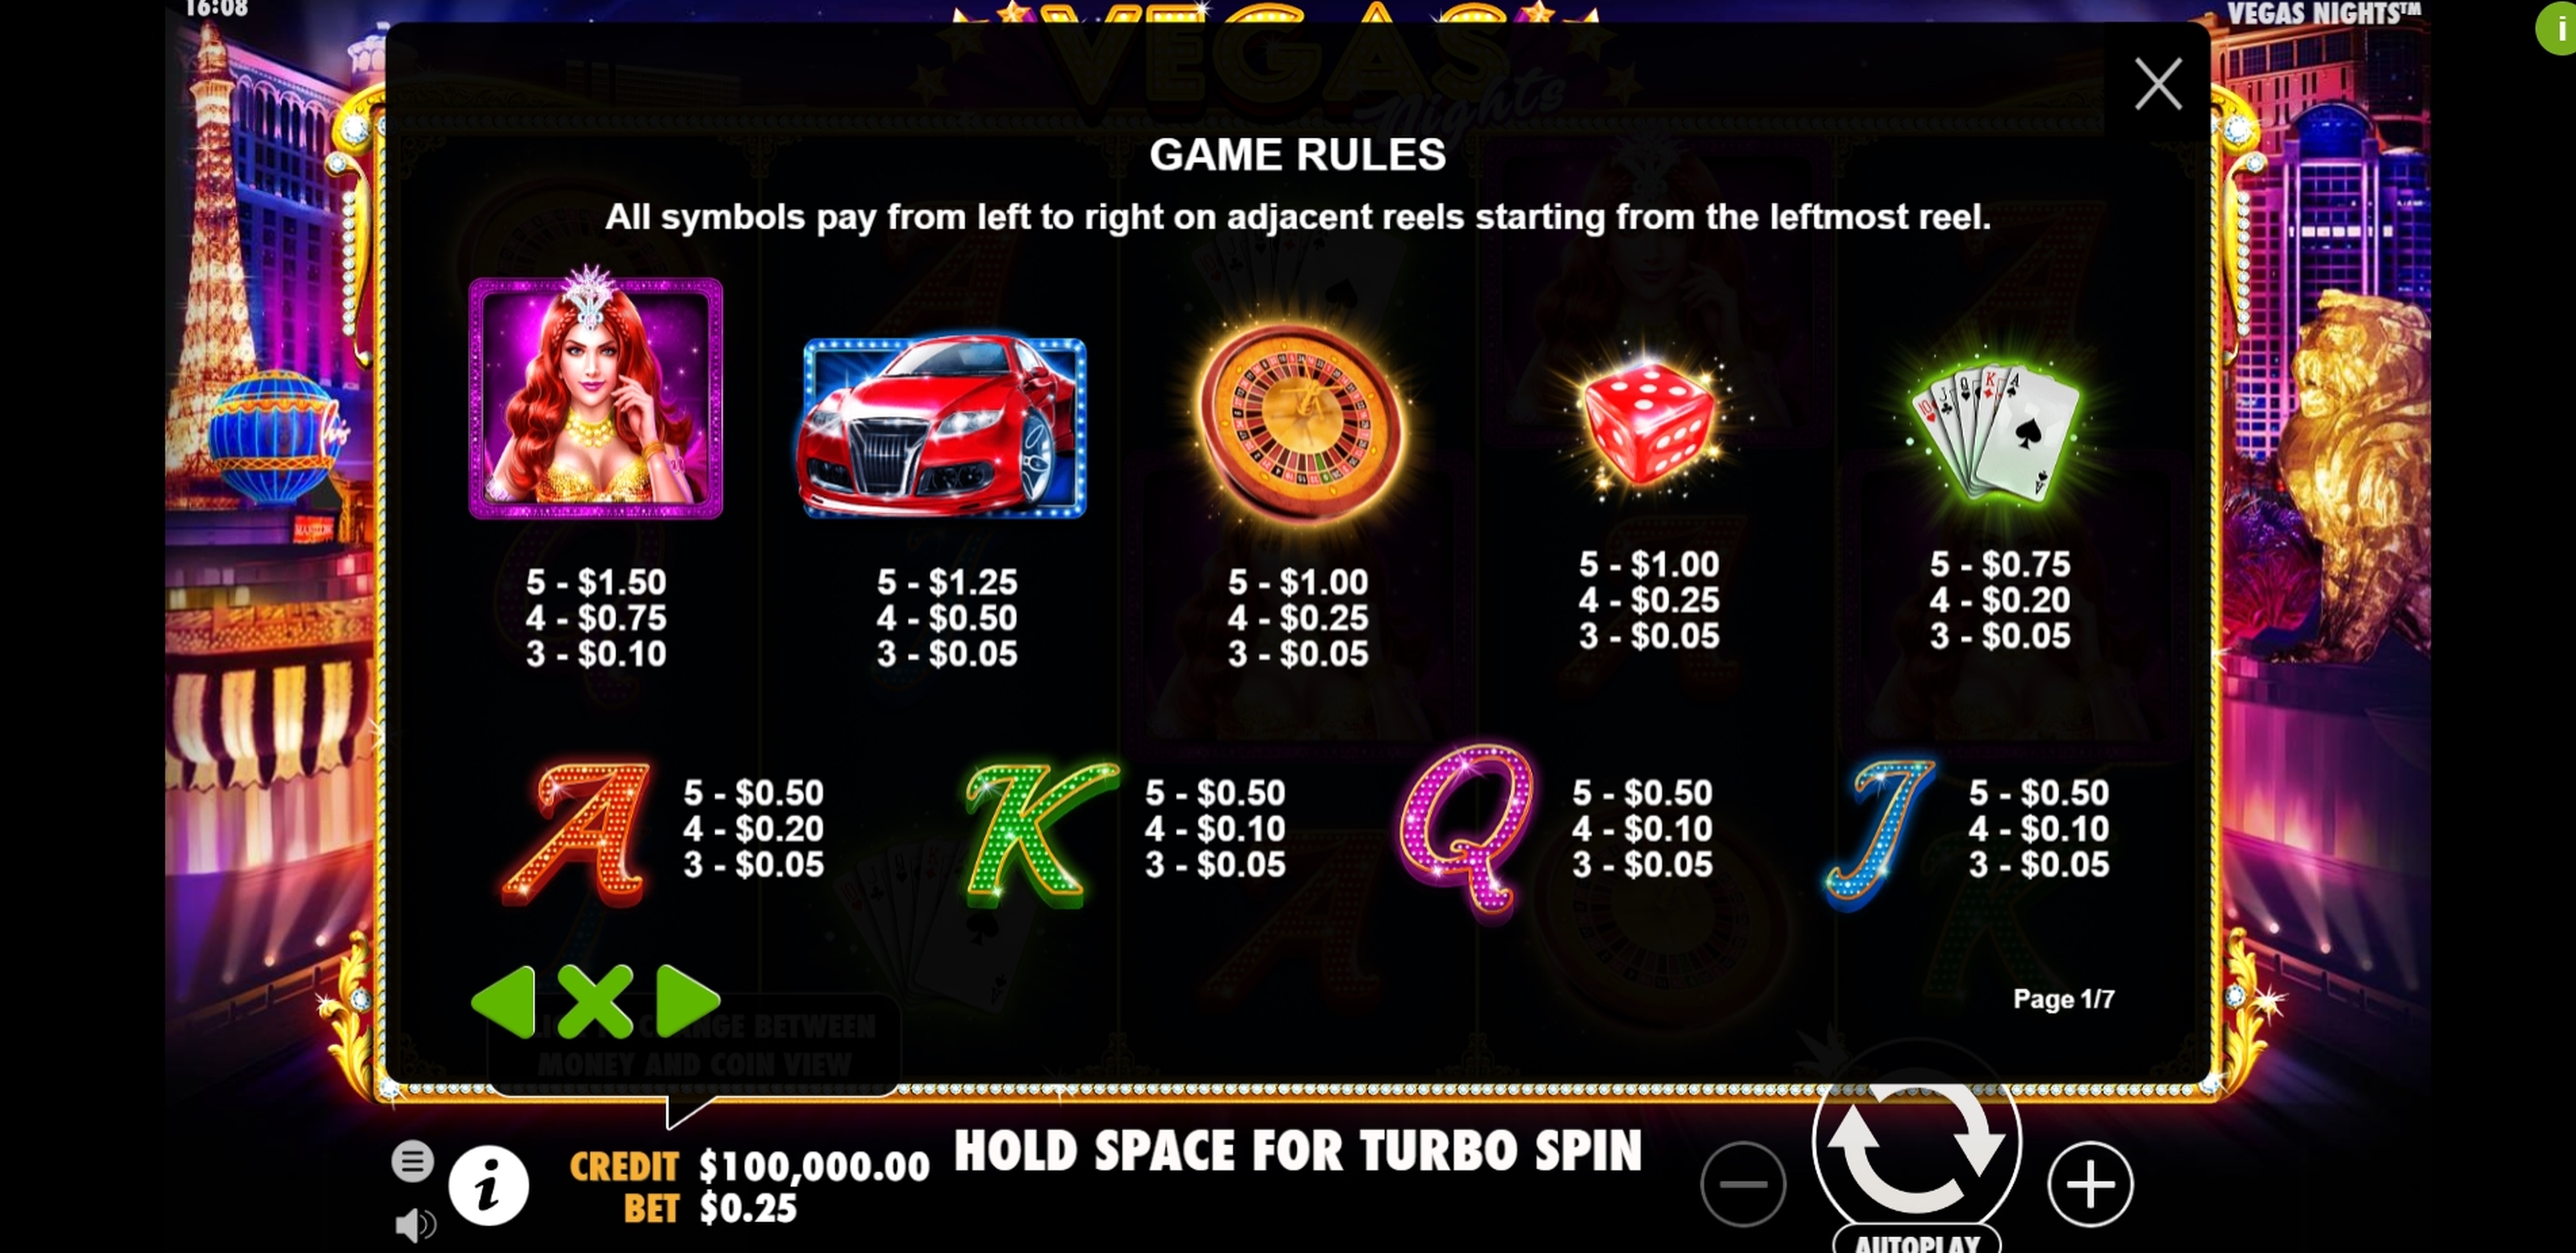 Info of Vegas Nights Slot Game by Pragmatic Play